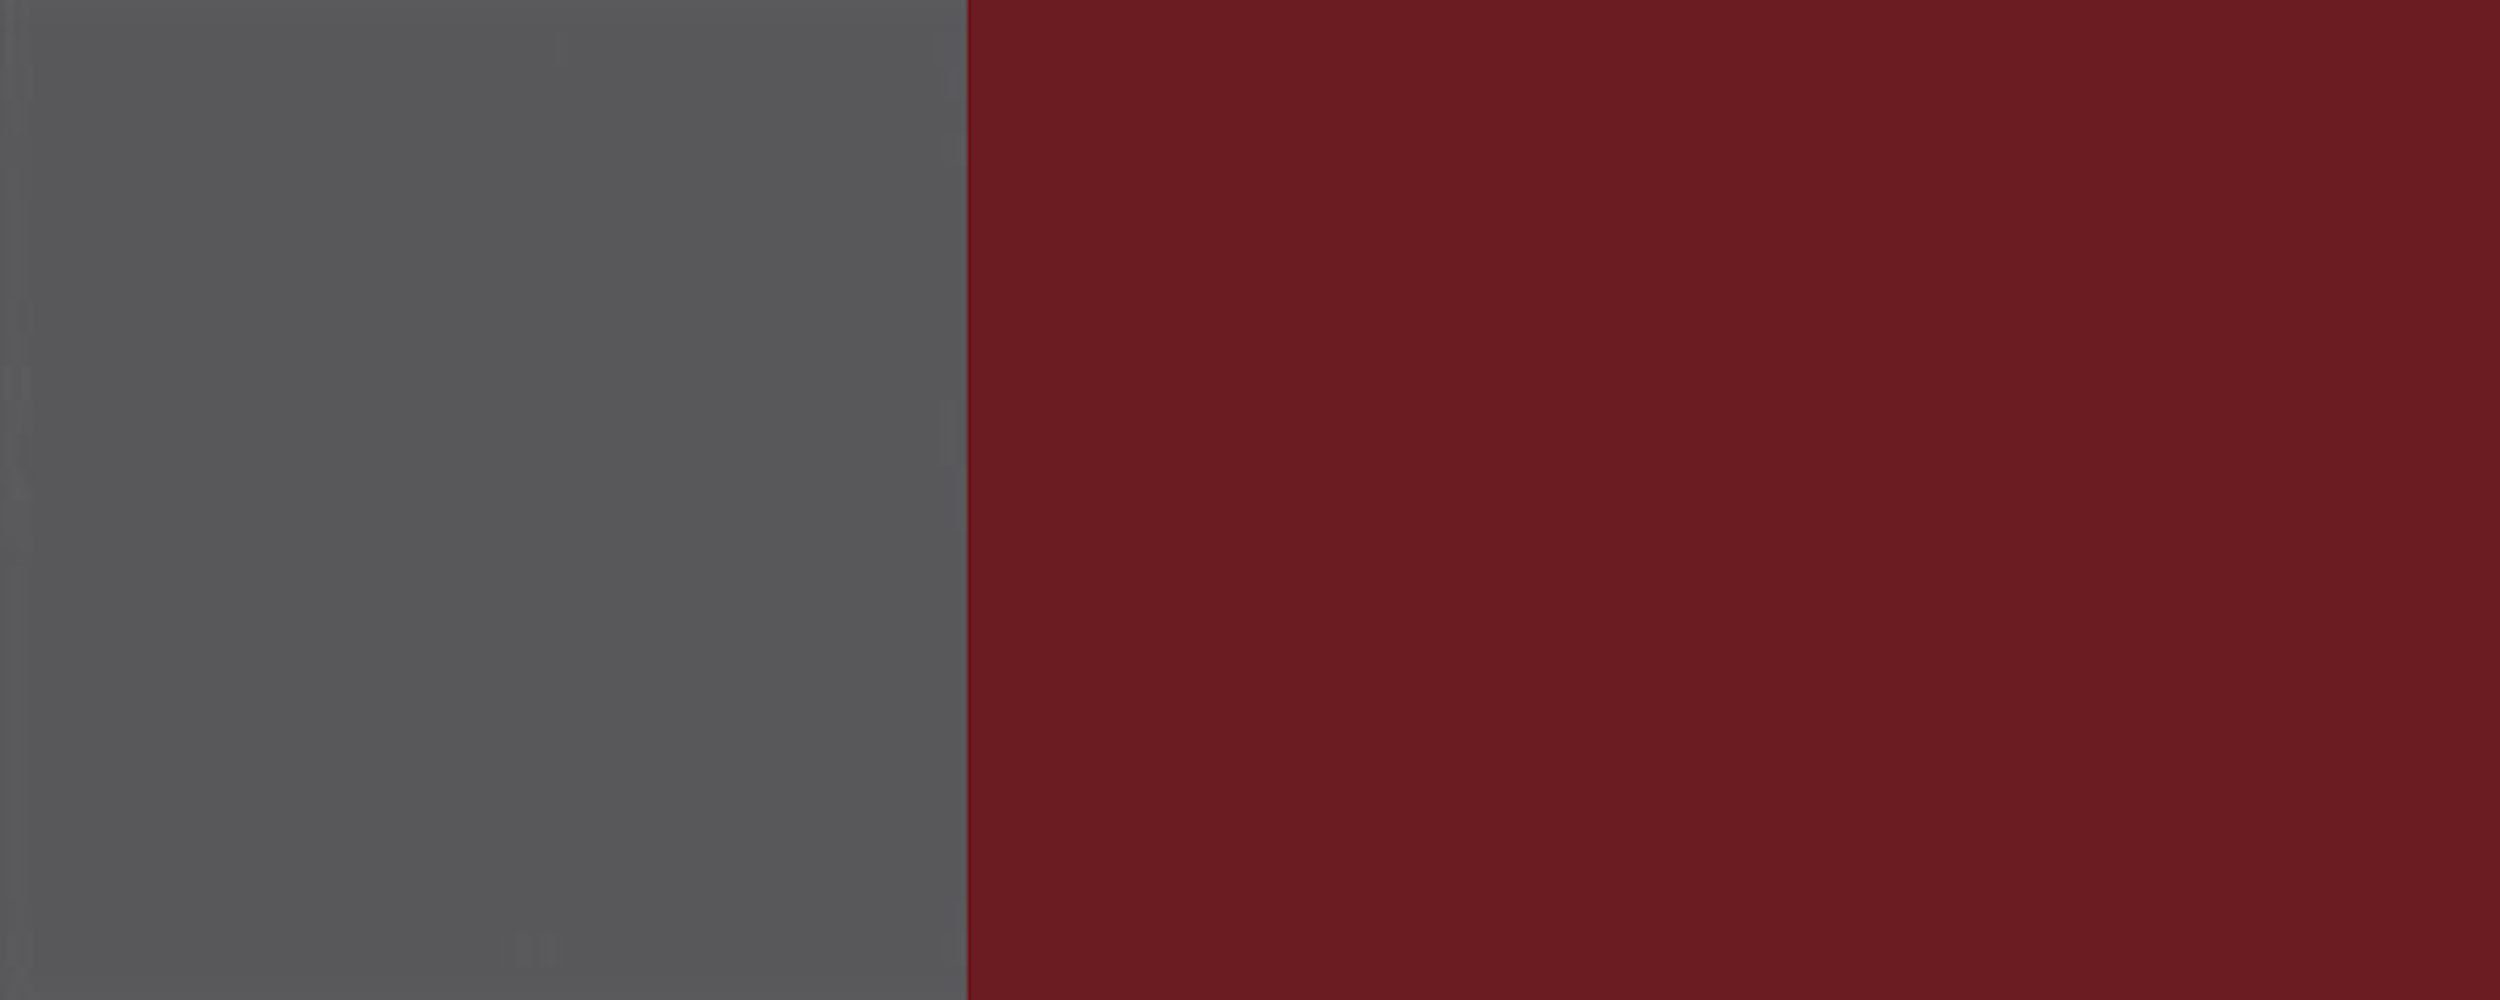 matt Front- purpurrot Korpusfarbe Glaseinsatz Klapphängeschrank Rimini 3004 wählbar 2-teilige & 90cm RAL Hochfaltklappe Feldmann-Wohnen (Rimini)